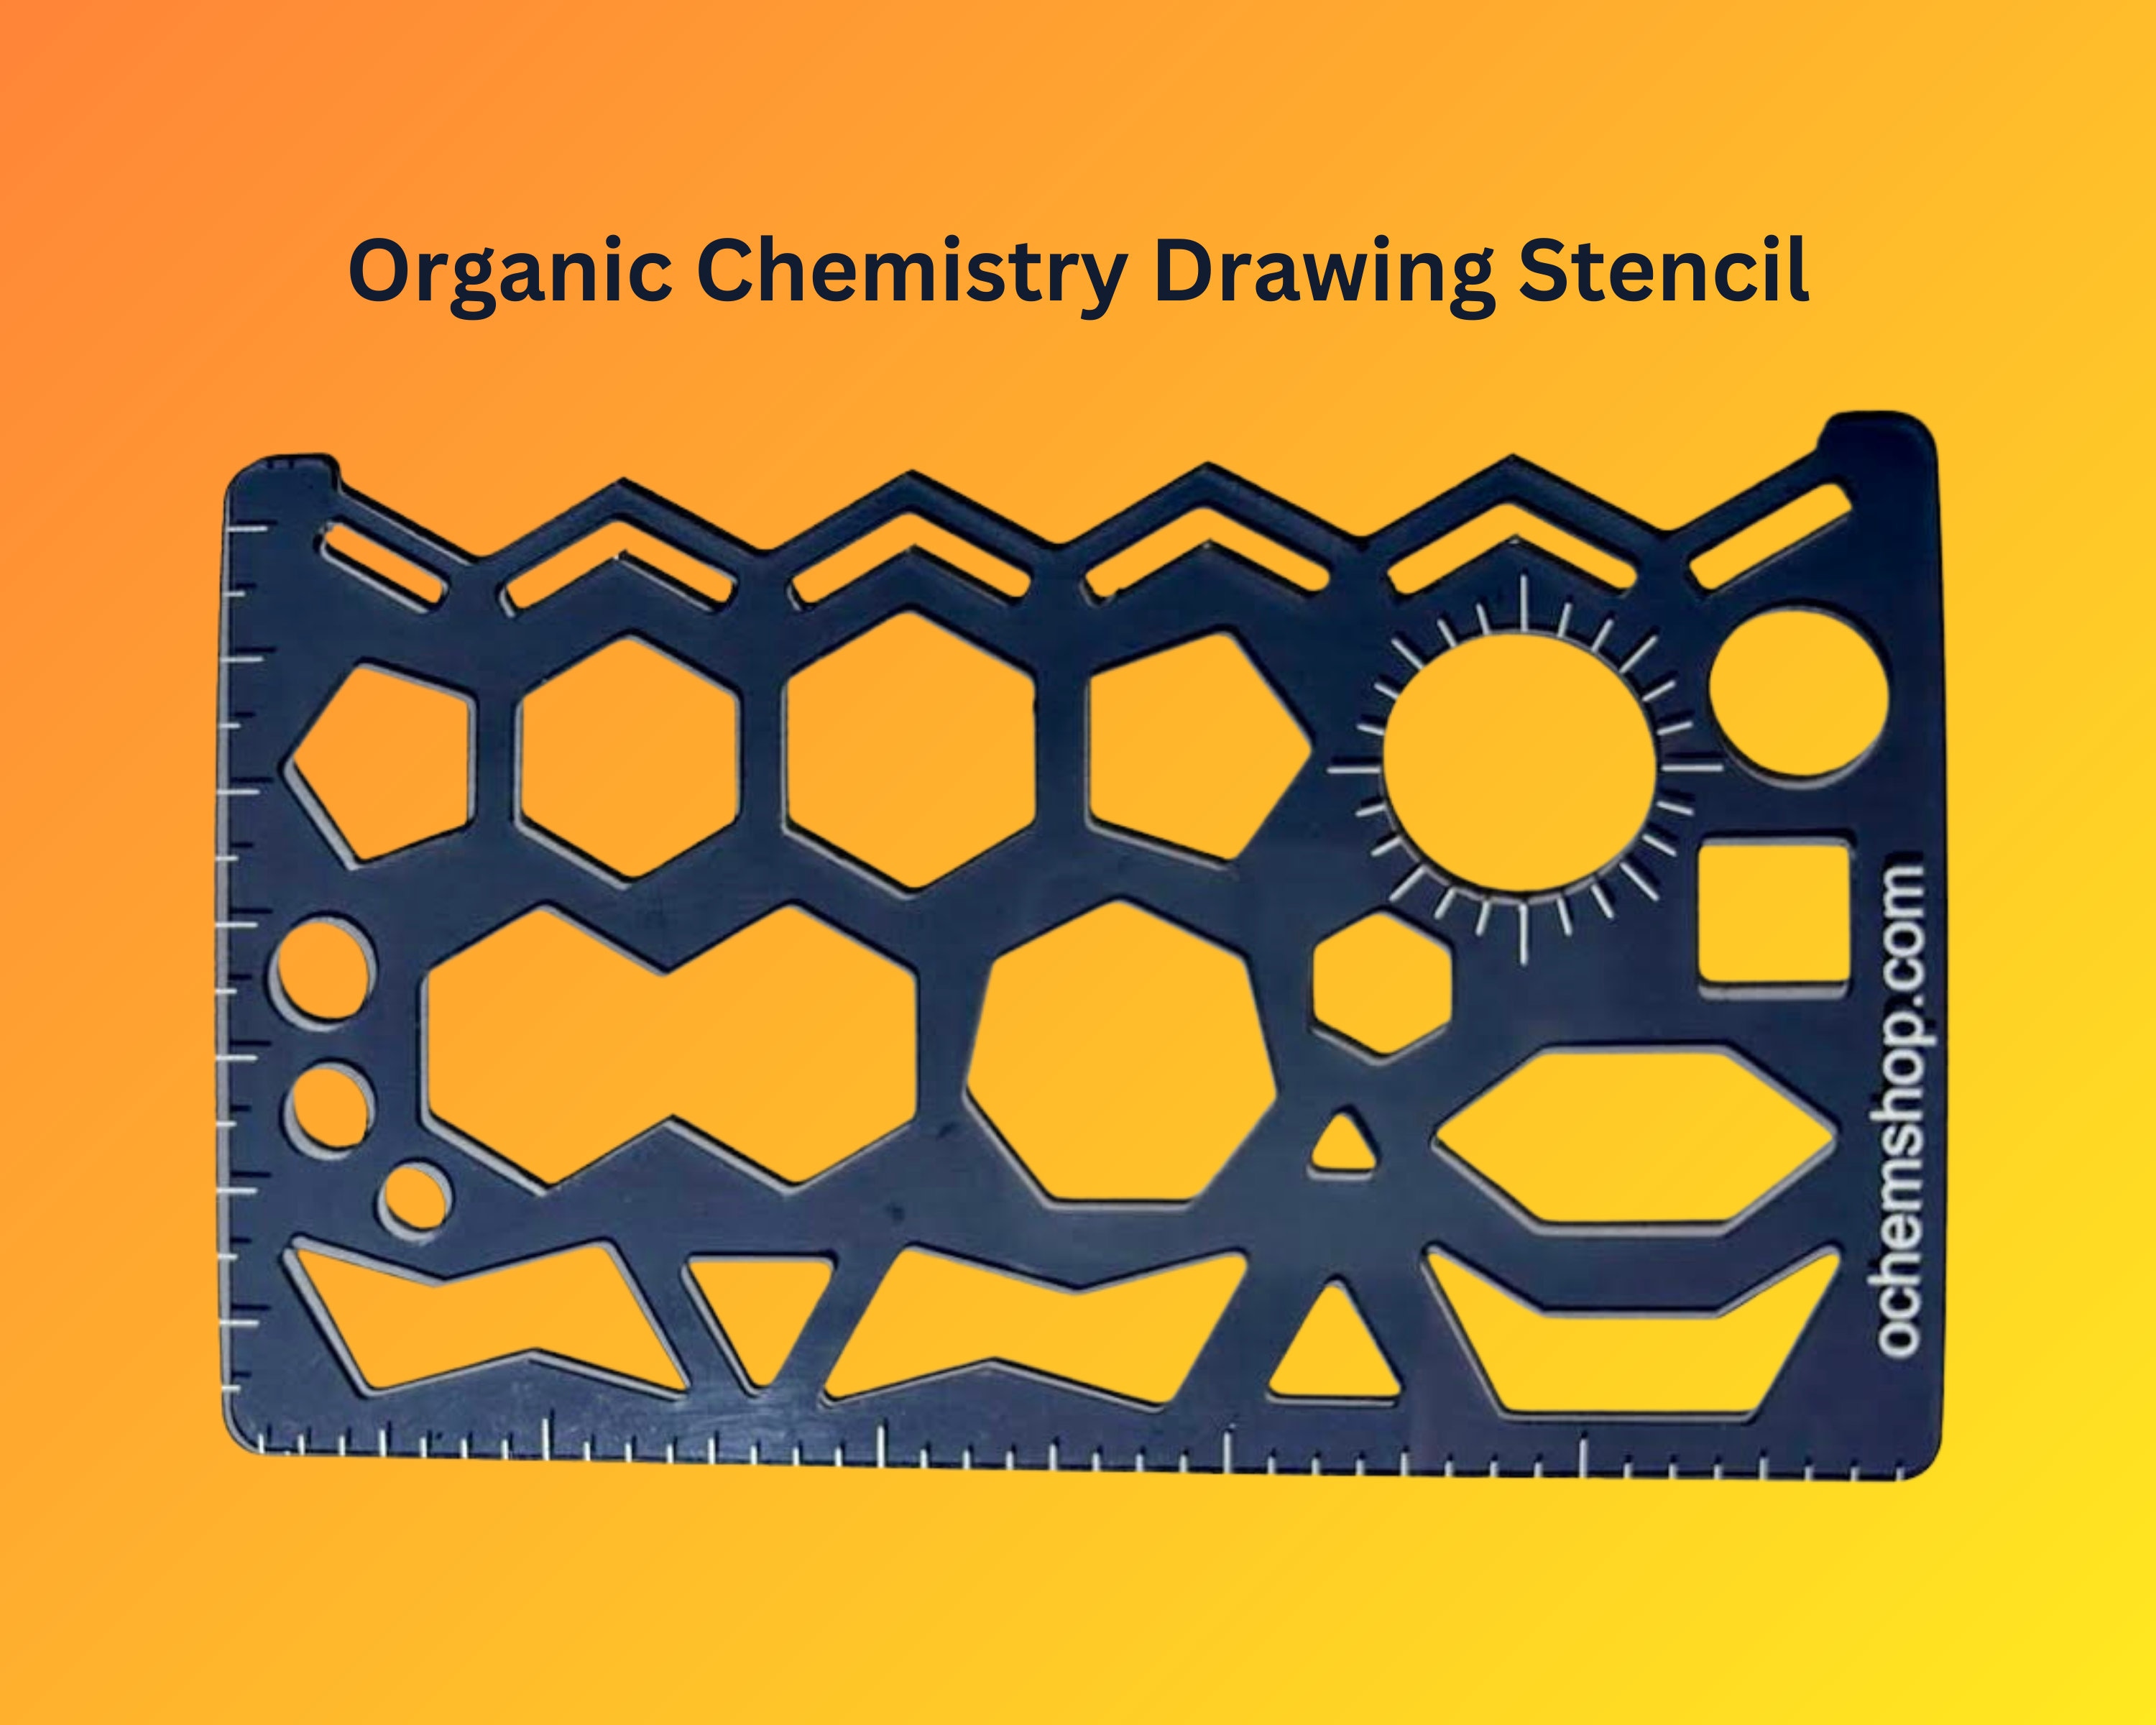 kenemak com Organic Chemistry Stencil Drawing Template - Organic